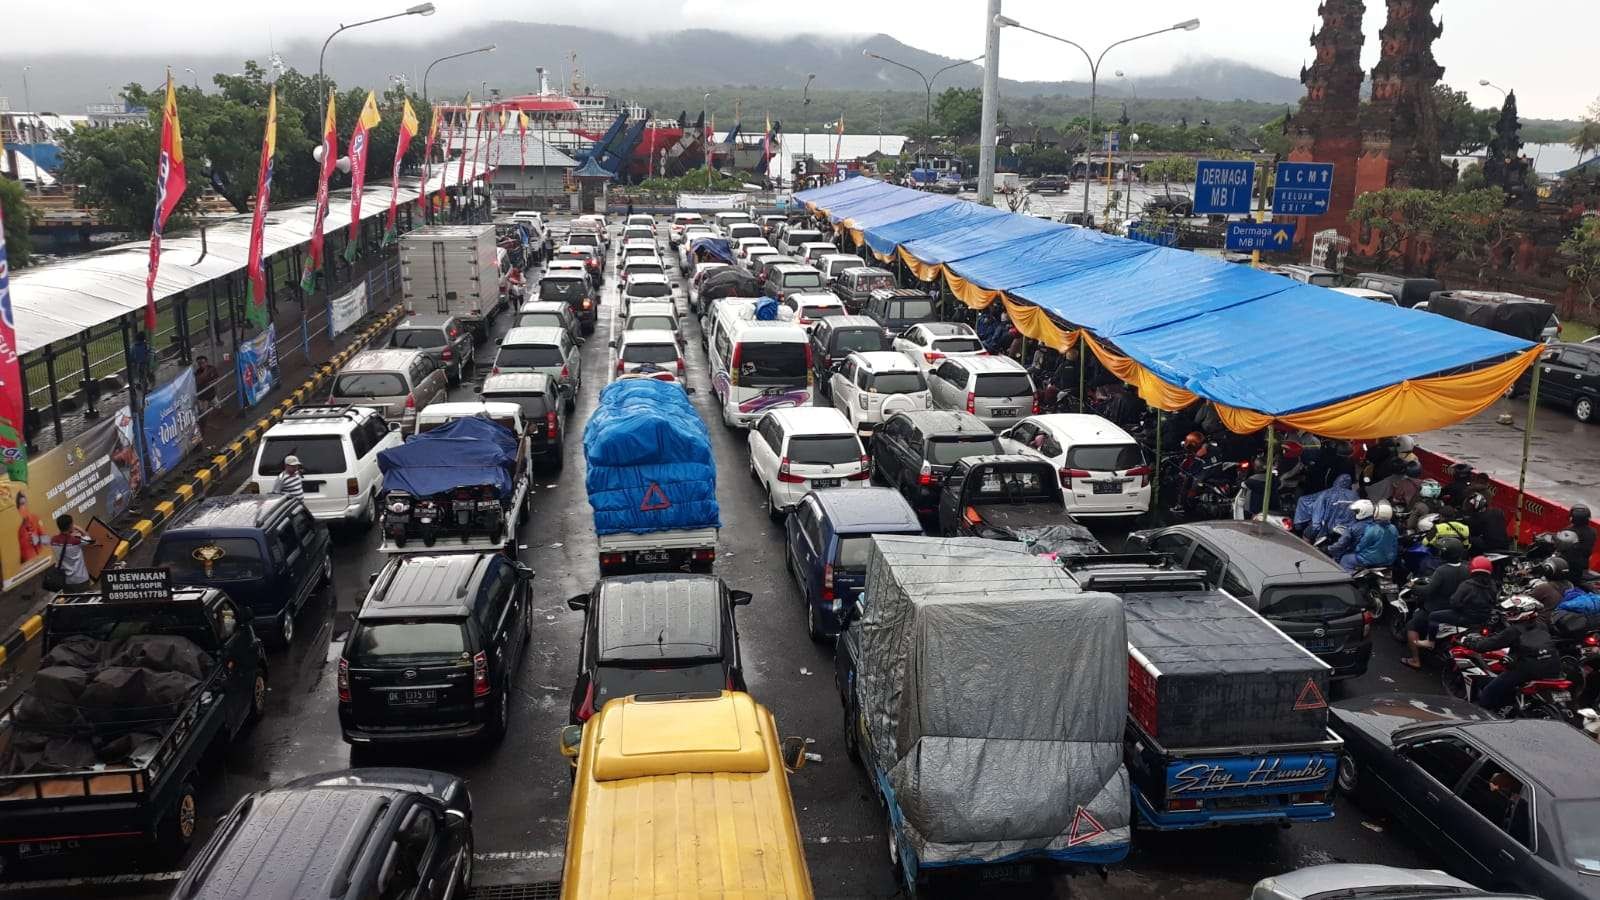 Antrean kendaraan memenuhi area parkir Pelabuhan Gilimanuk. Kendaraan ini akan menyeberang ke Jawa. (Foto: Istimewa)